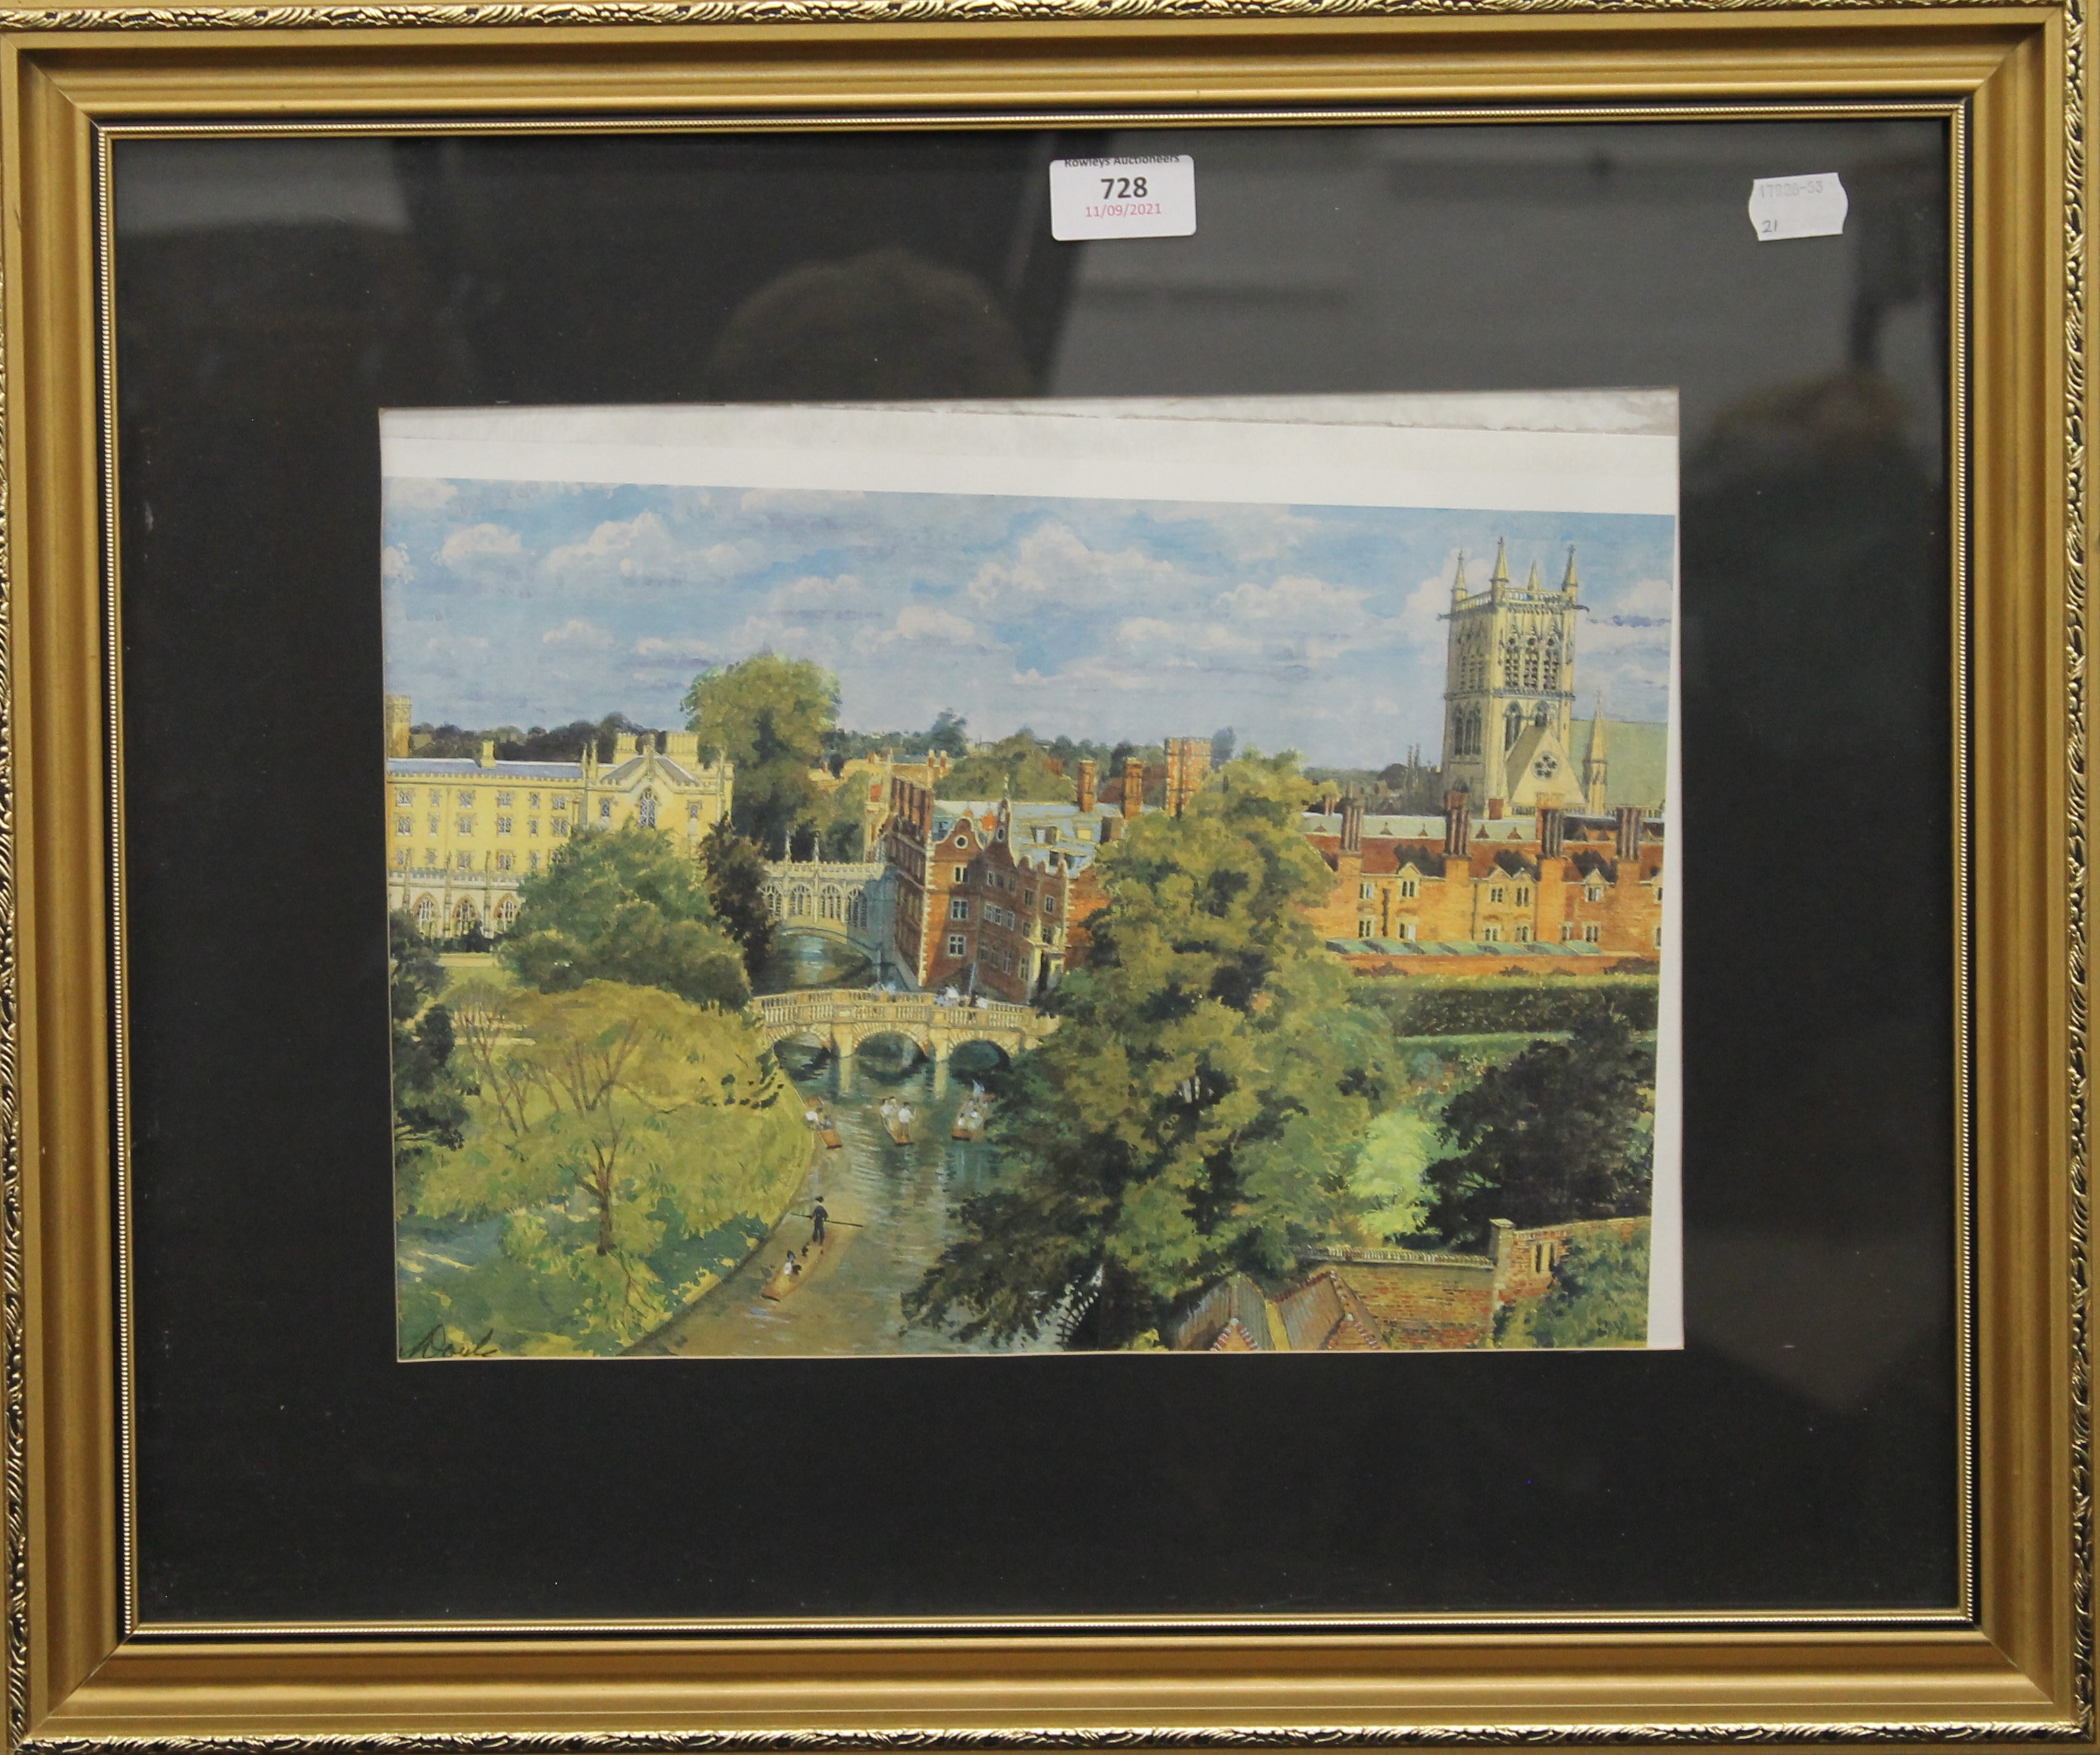 JOHN DOYLE, St John's College, Cambridge, limited edition print, framed and glazed. 34.5 x 25.5 cm. - Image 2 of 2